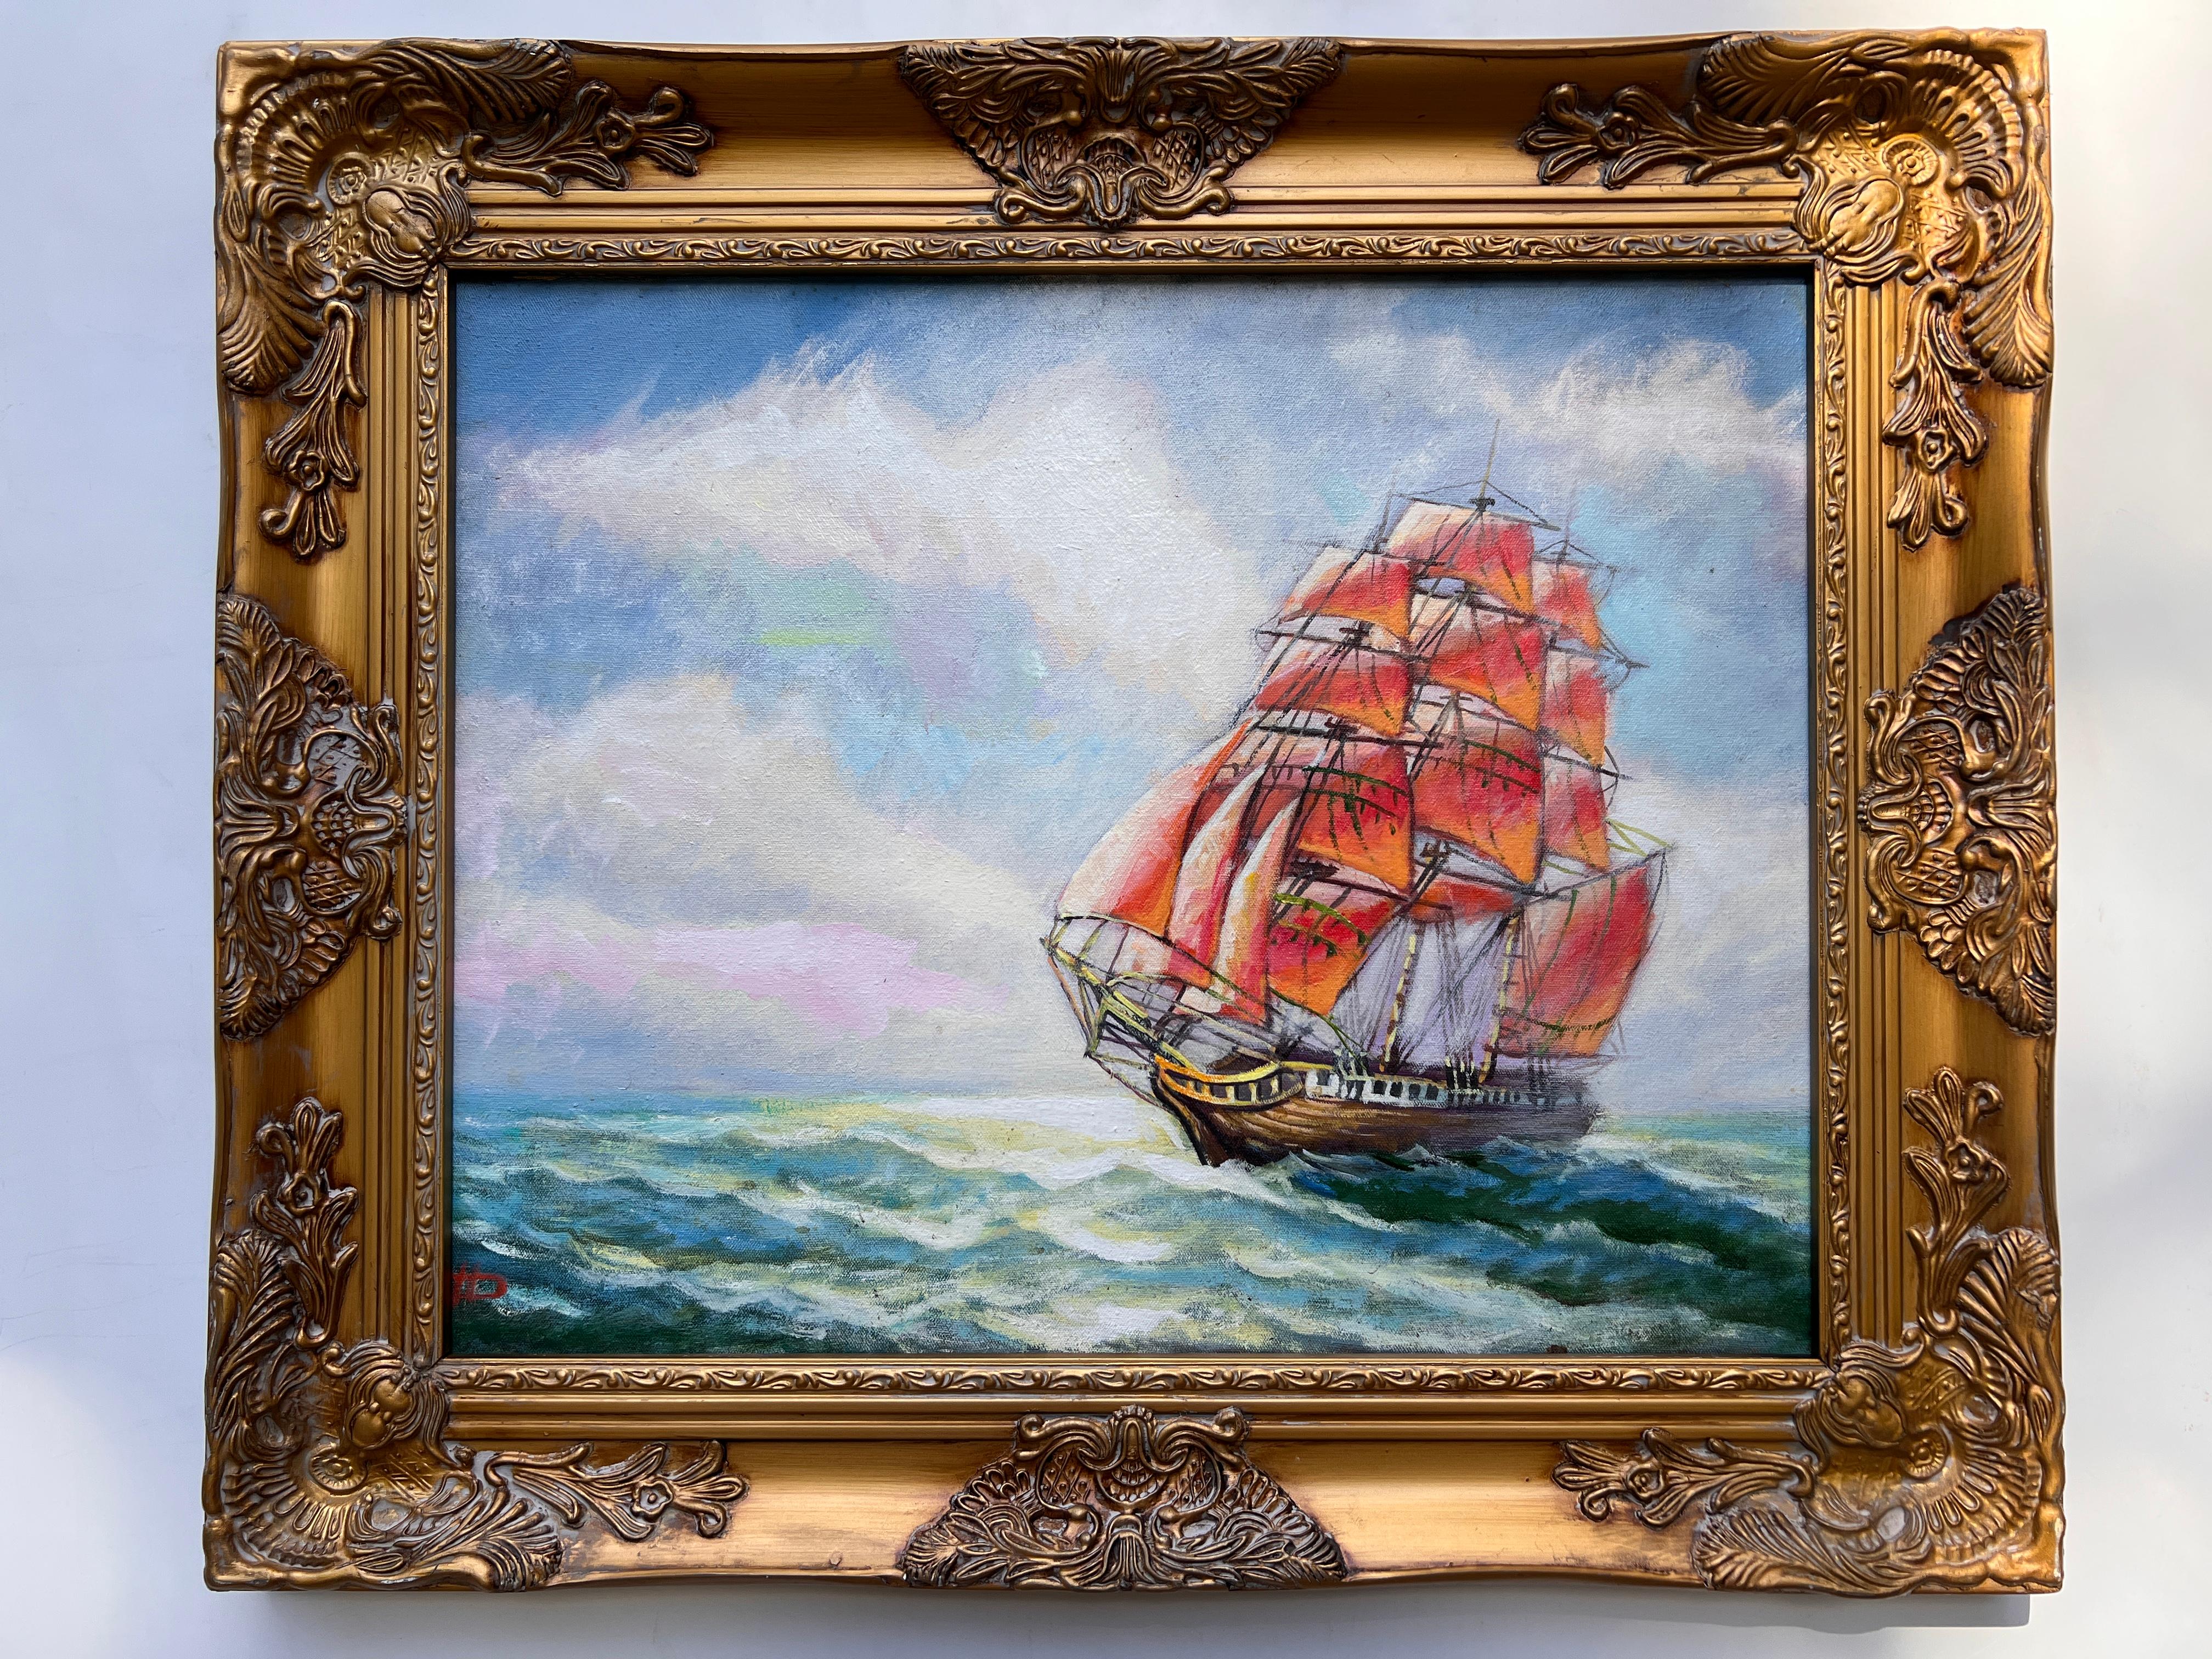 Artist Dobritsin Oil painting on canvas, seascape, Sailing ship, Framed - Painting by Nicolay Dobritsin 